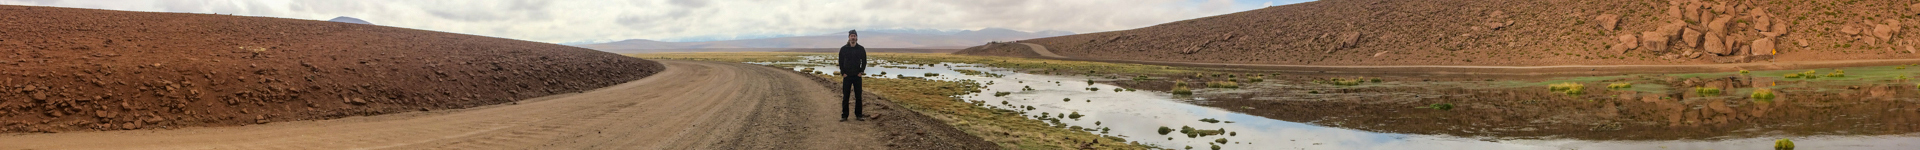 Vado del Rio Putana - San Pedro de Atacama, Chile